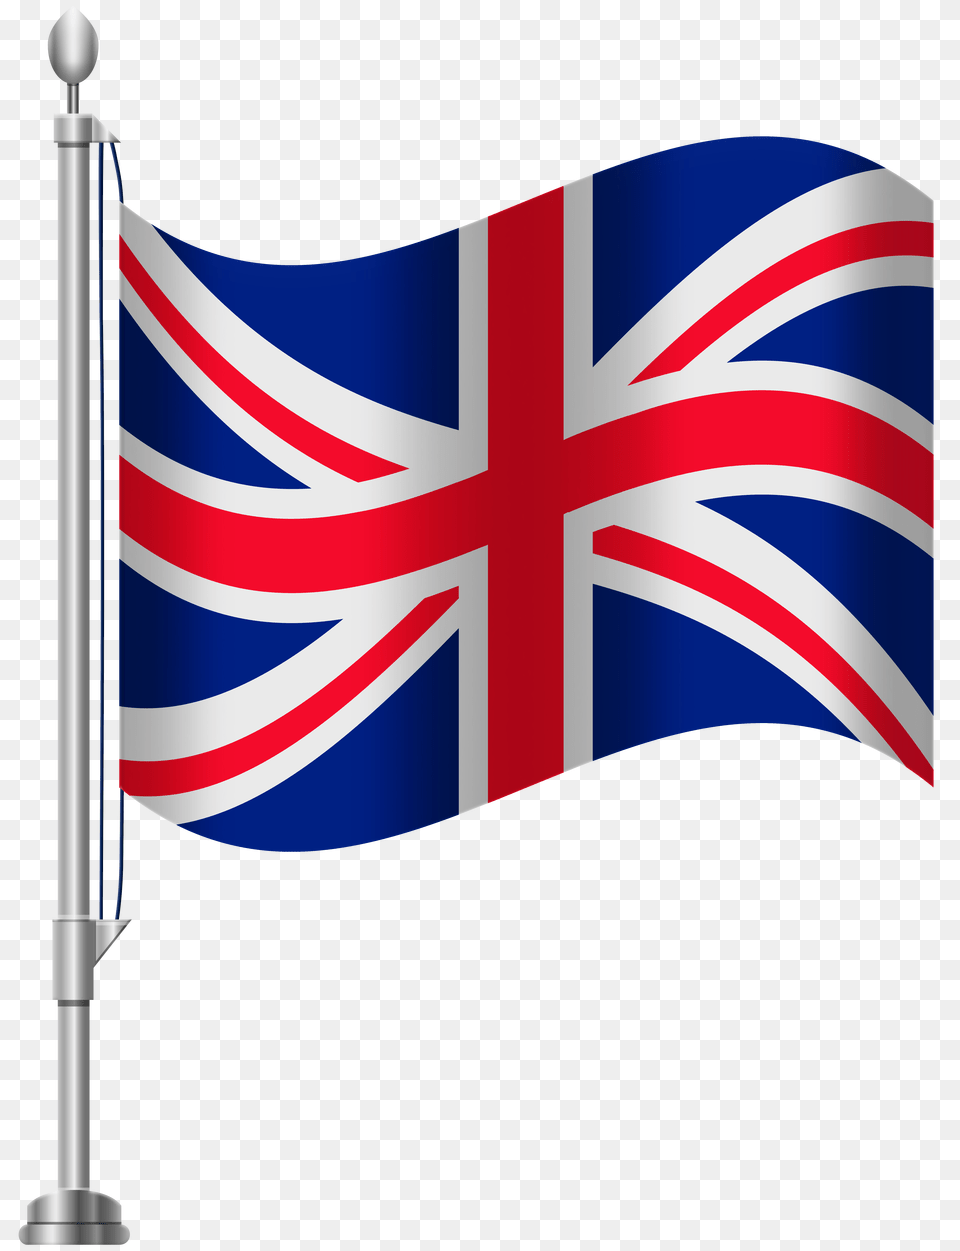 Somalia Flag Clip Art Best Web Clipart For Flag Clipart, Dynamite, Weapon, United Kingdom Flag Free Png